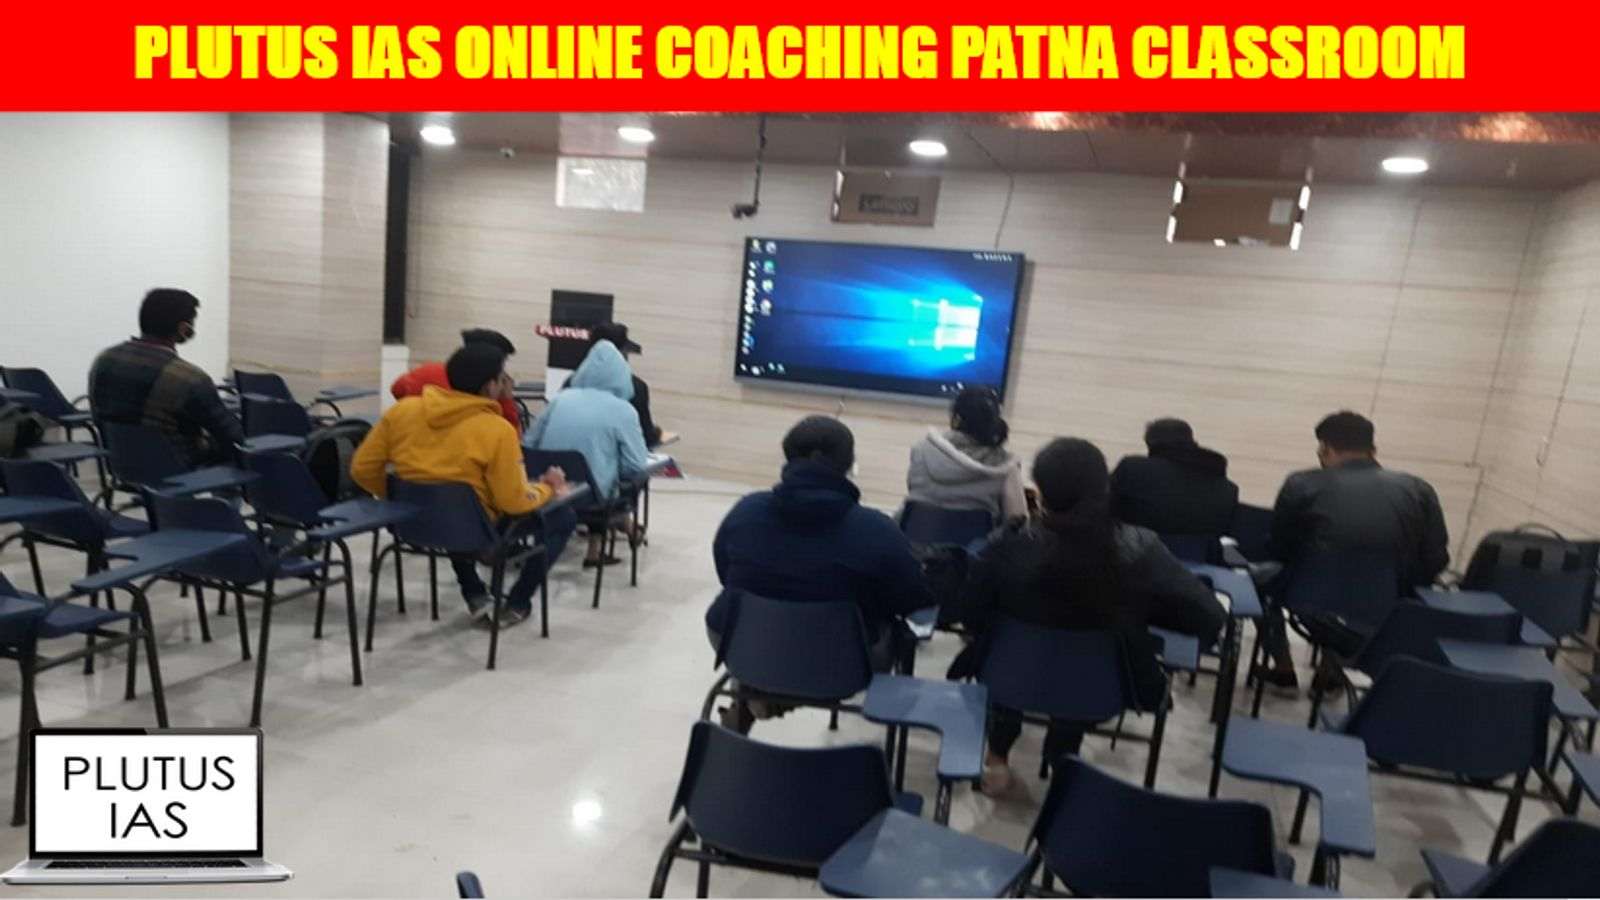 Plutus IAS Online Coaching Patna Classroom